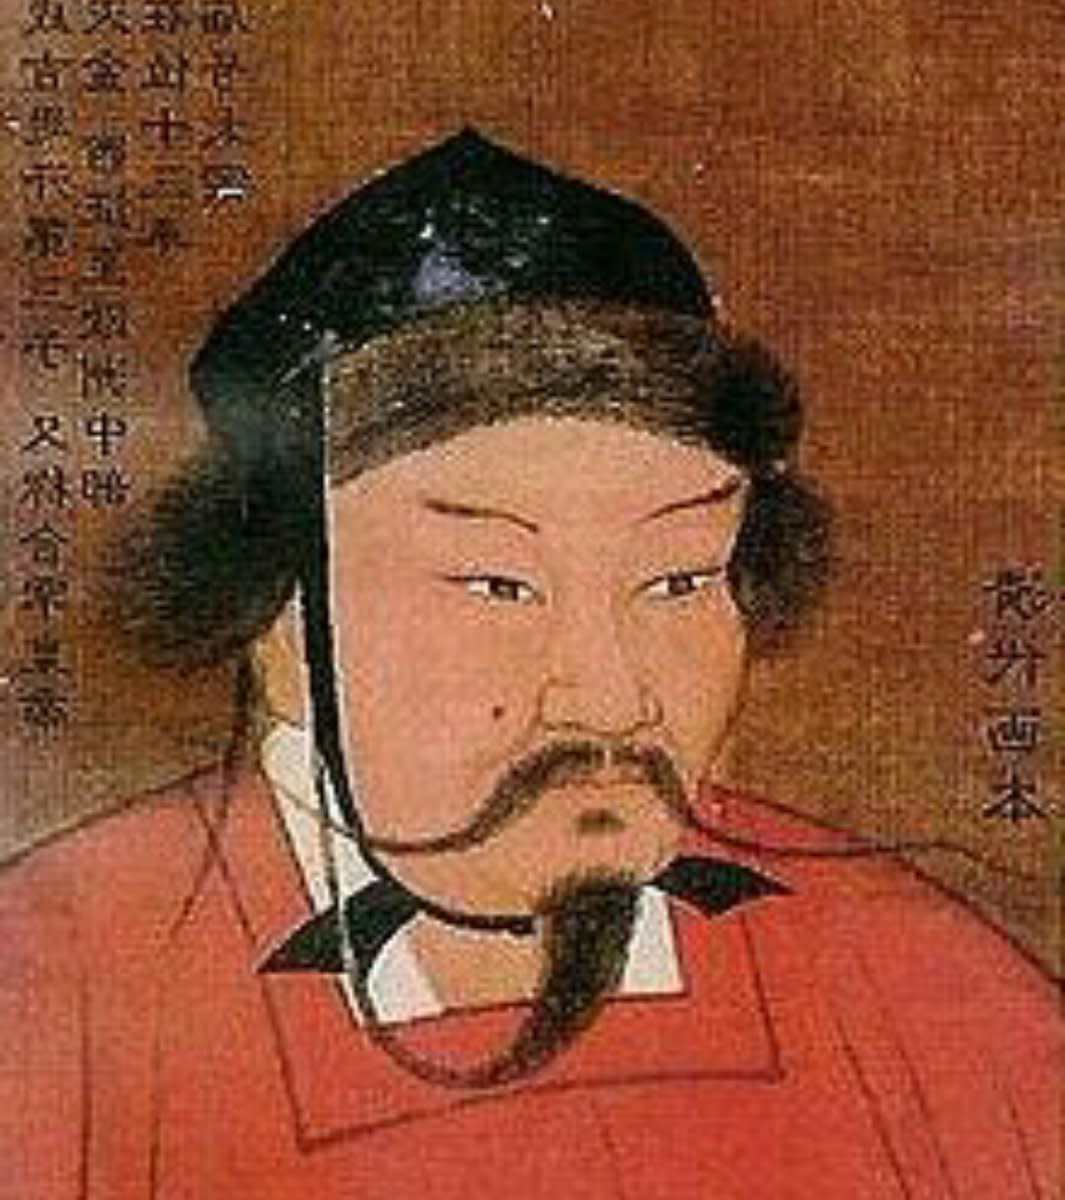 The Mongol Empire: Kublai Khan's Impact on China